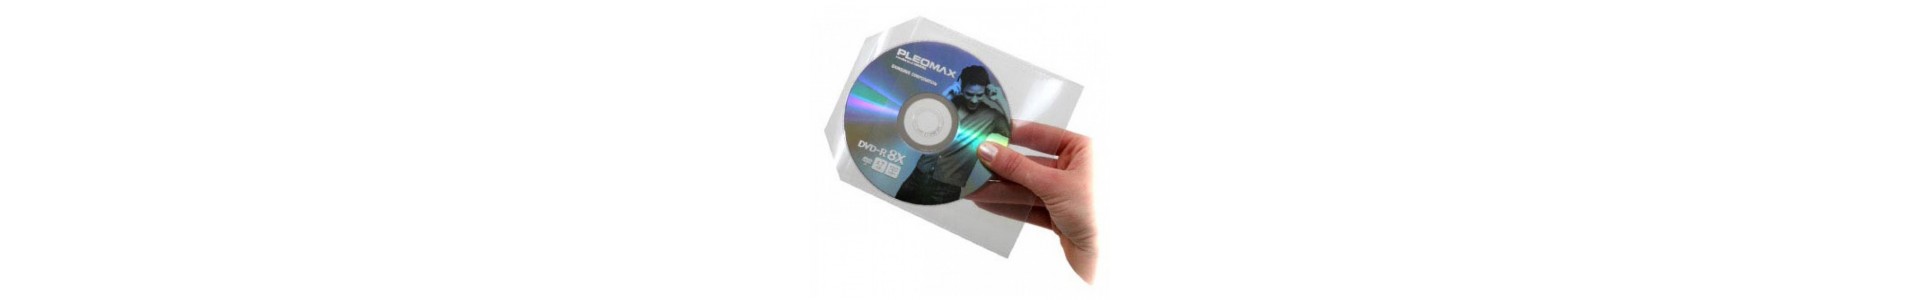 Bolsas CDs/DVDs